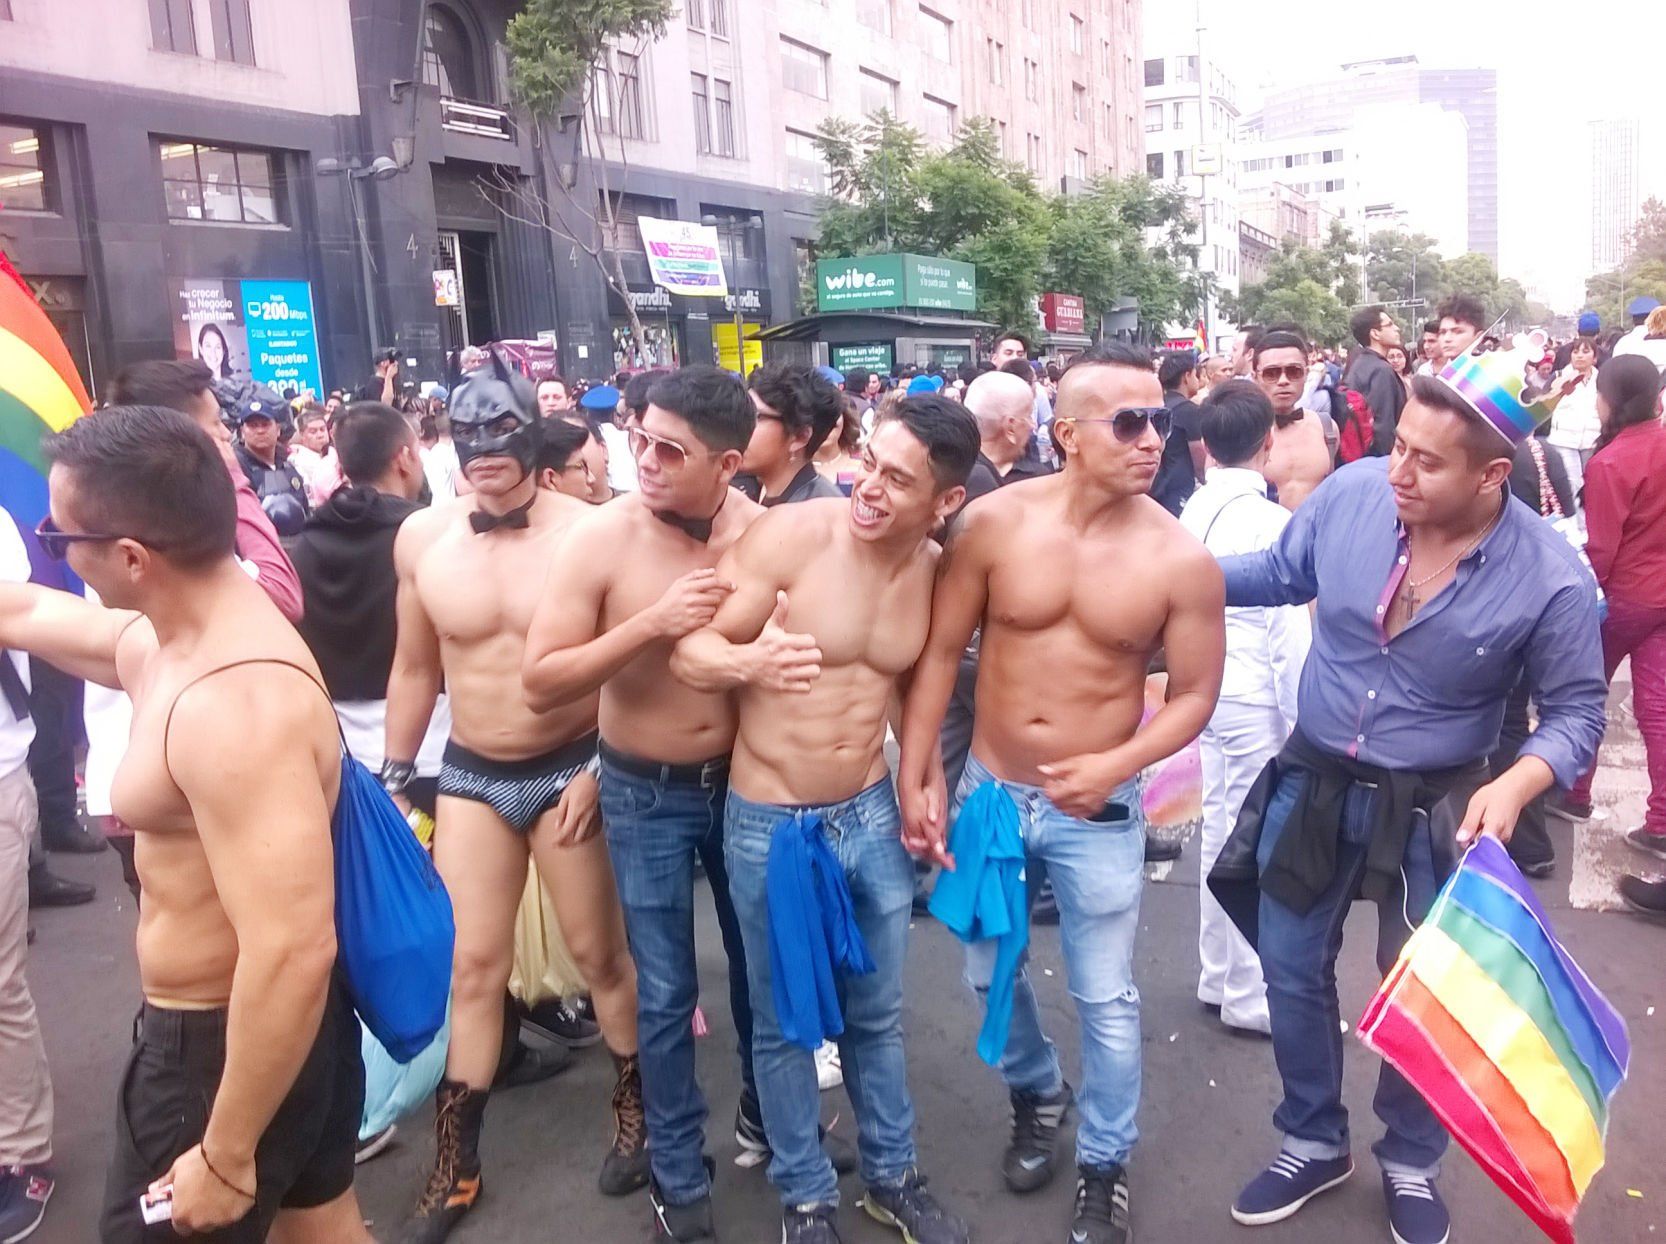 best of Obscene parade video Gay pride